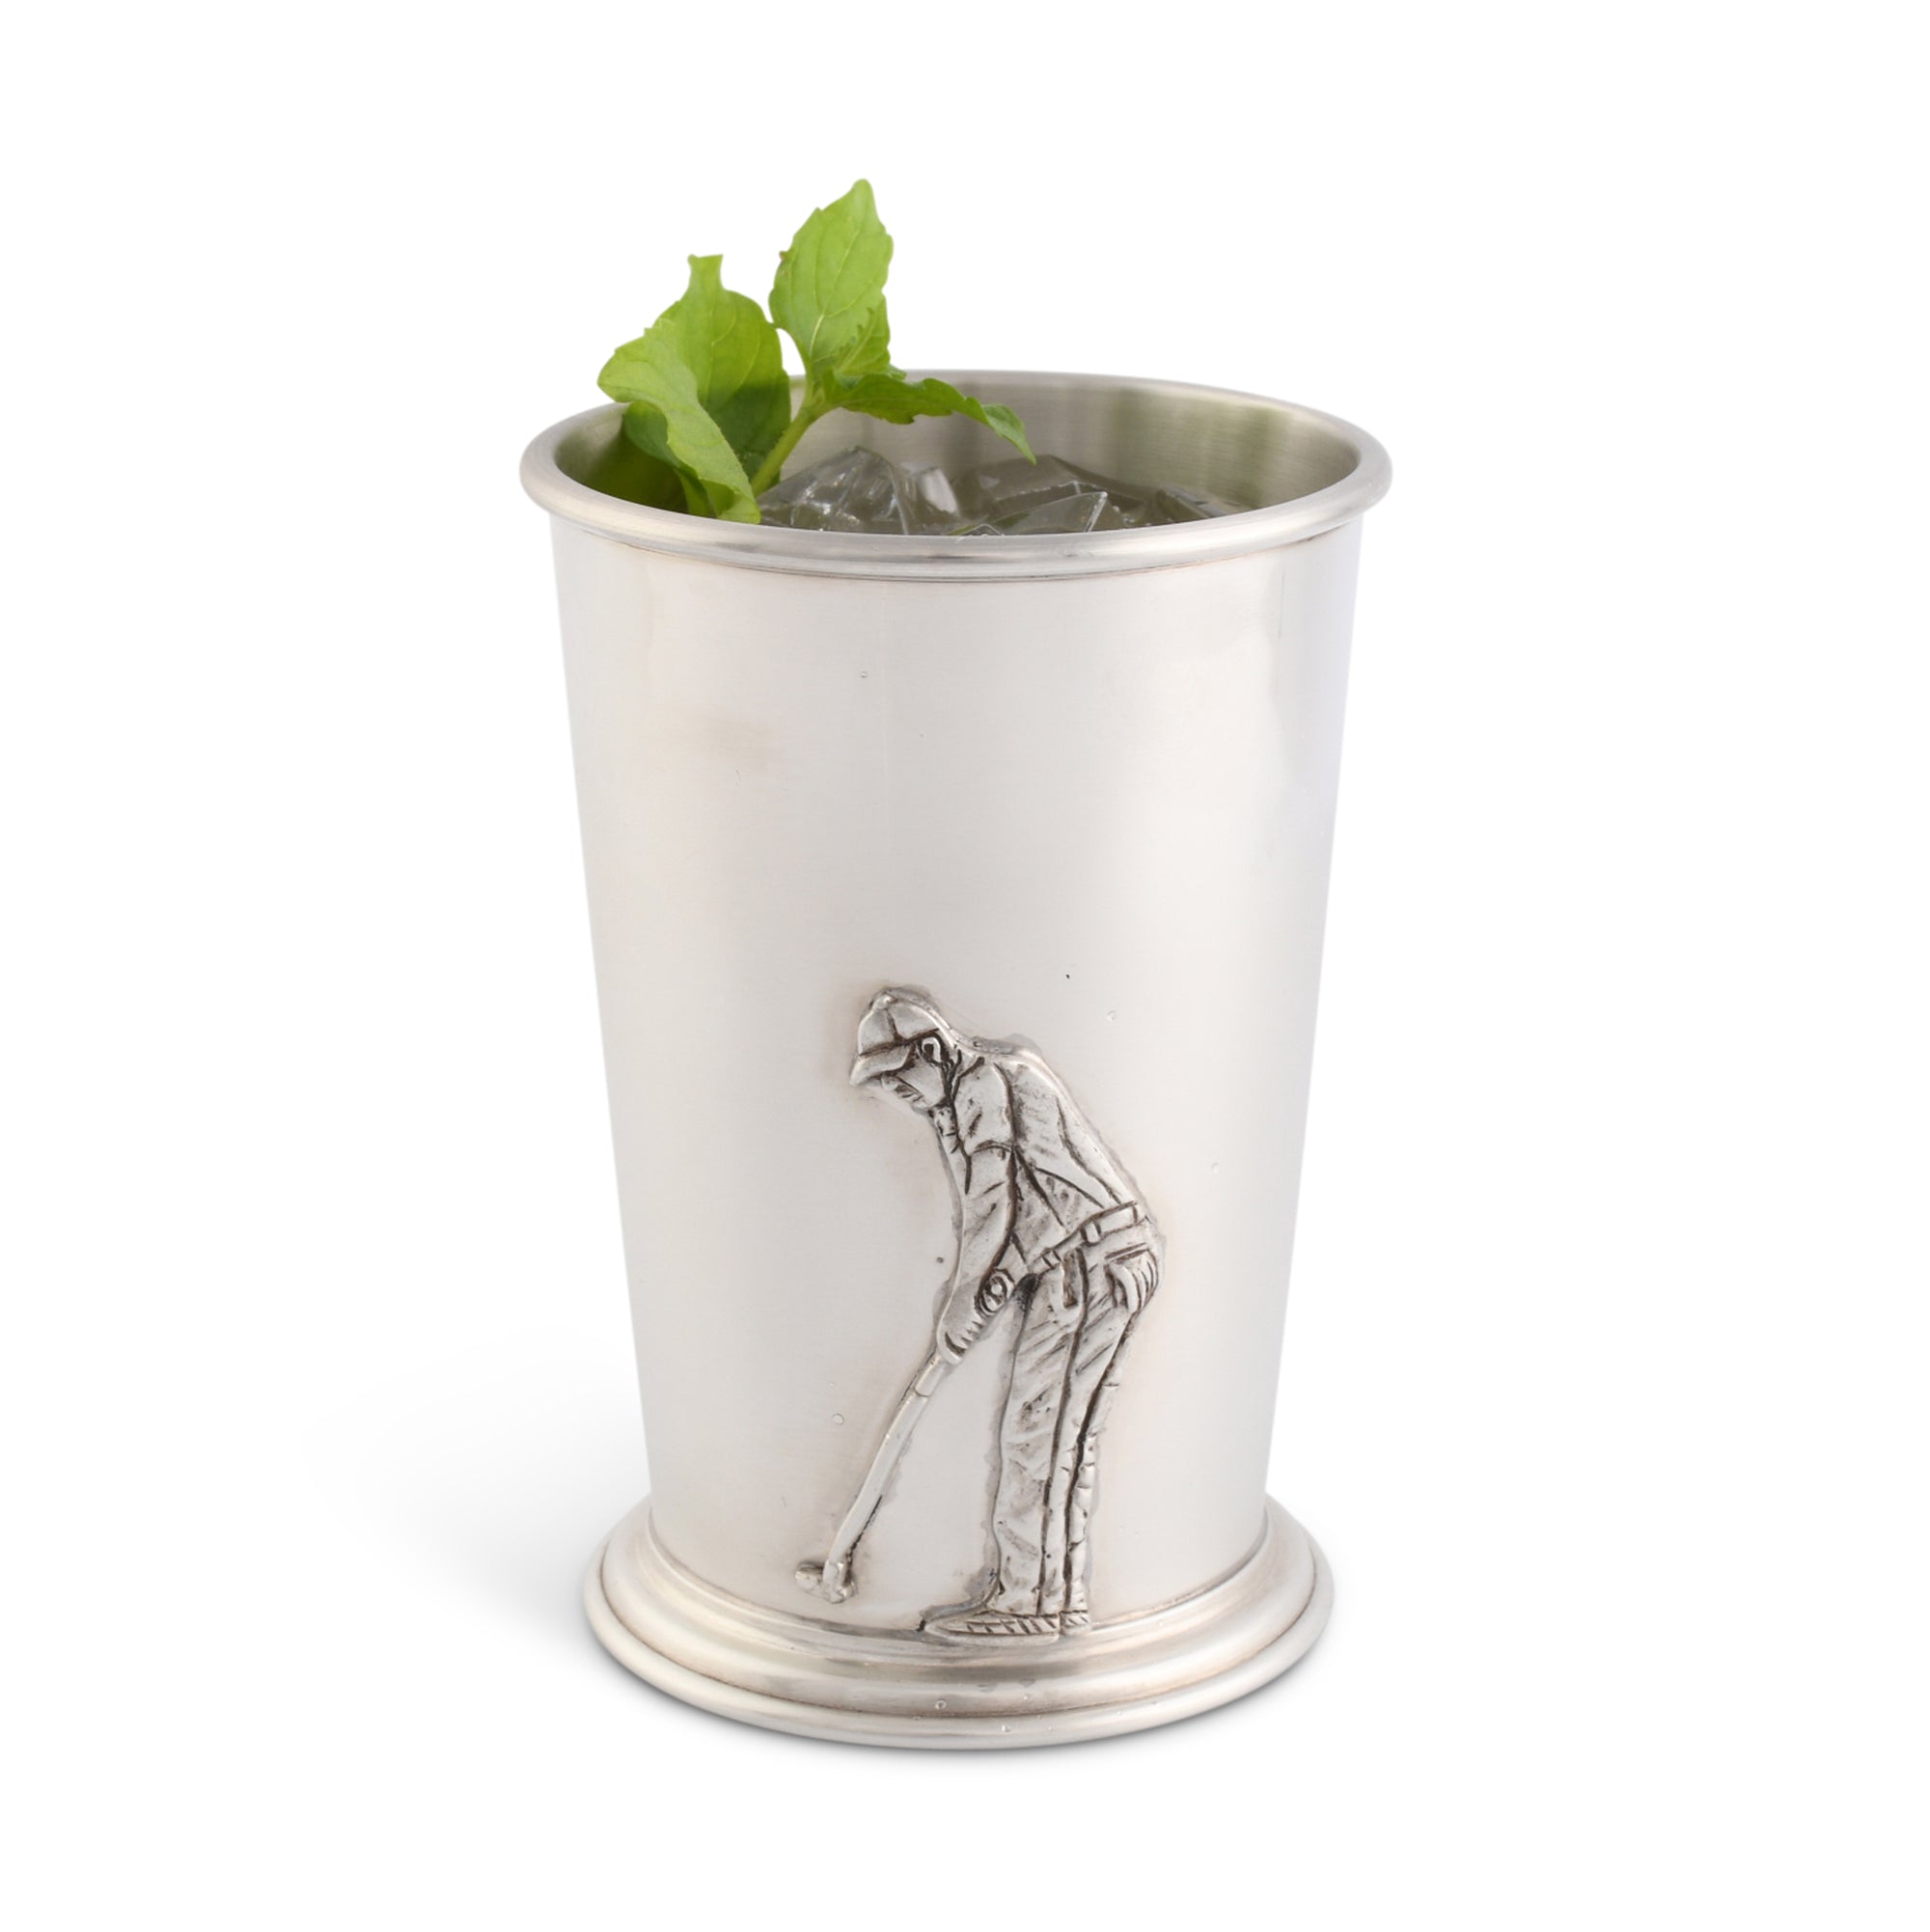 Vagabond House Pewter Golfer Mint Julip Cup Product Image